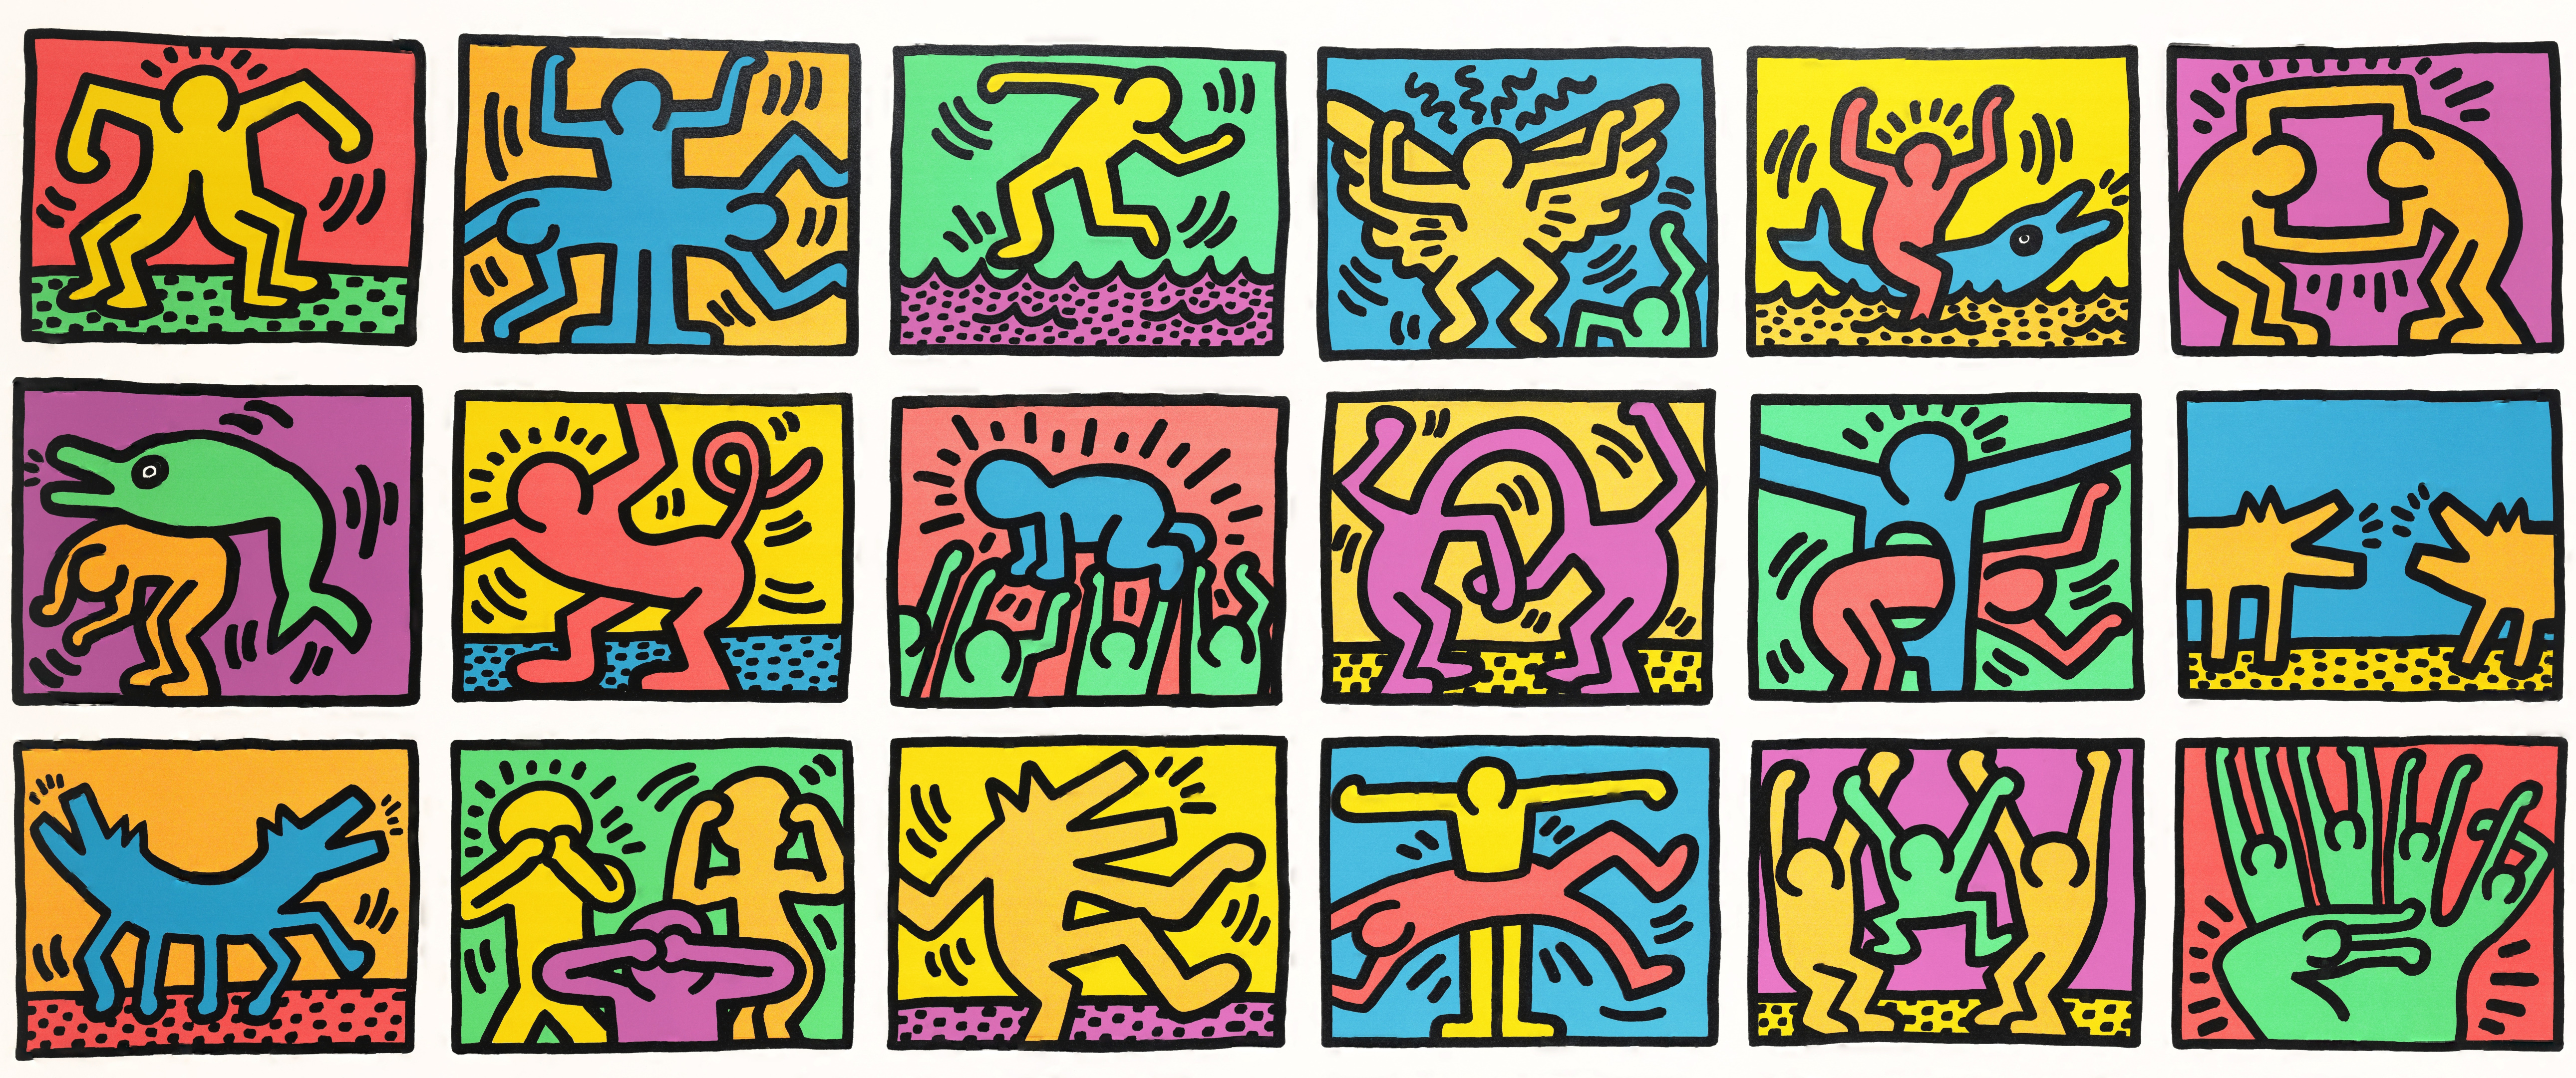 Keith Haring Acrylic Pop Art Fabric Drawing 5160x2160